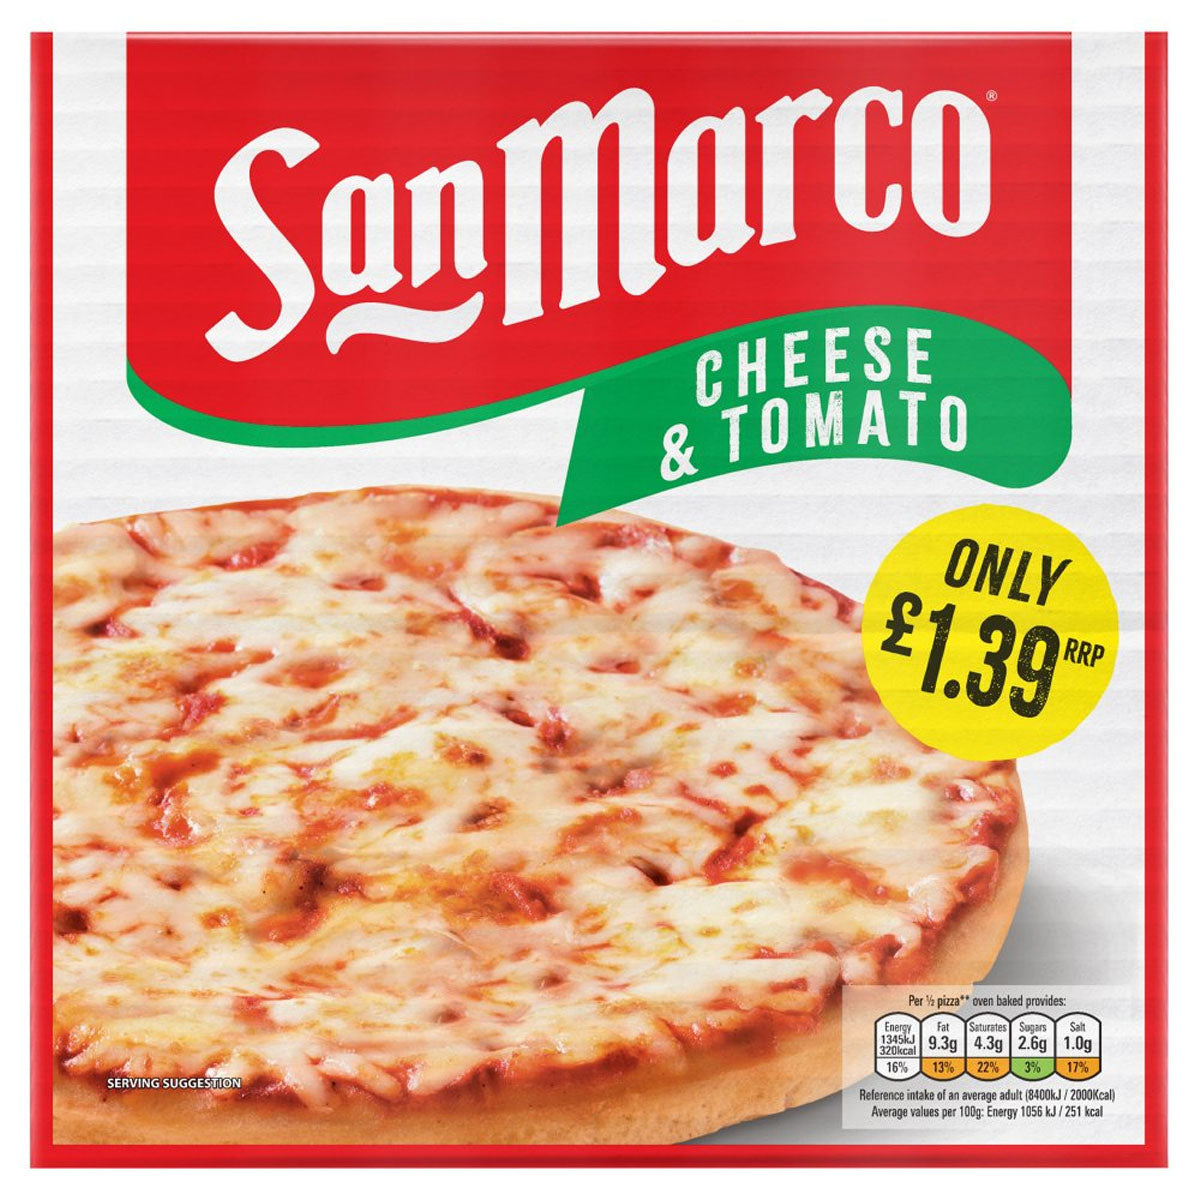 San Marco - Cheese & Tomato Pizza - 253g and tomato pizza.